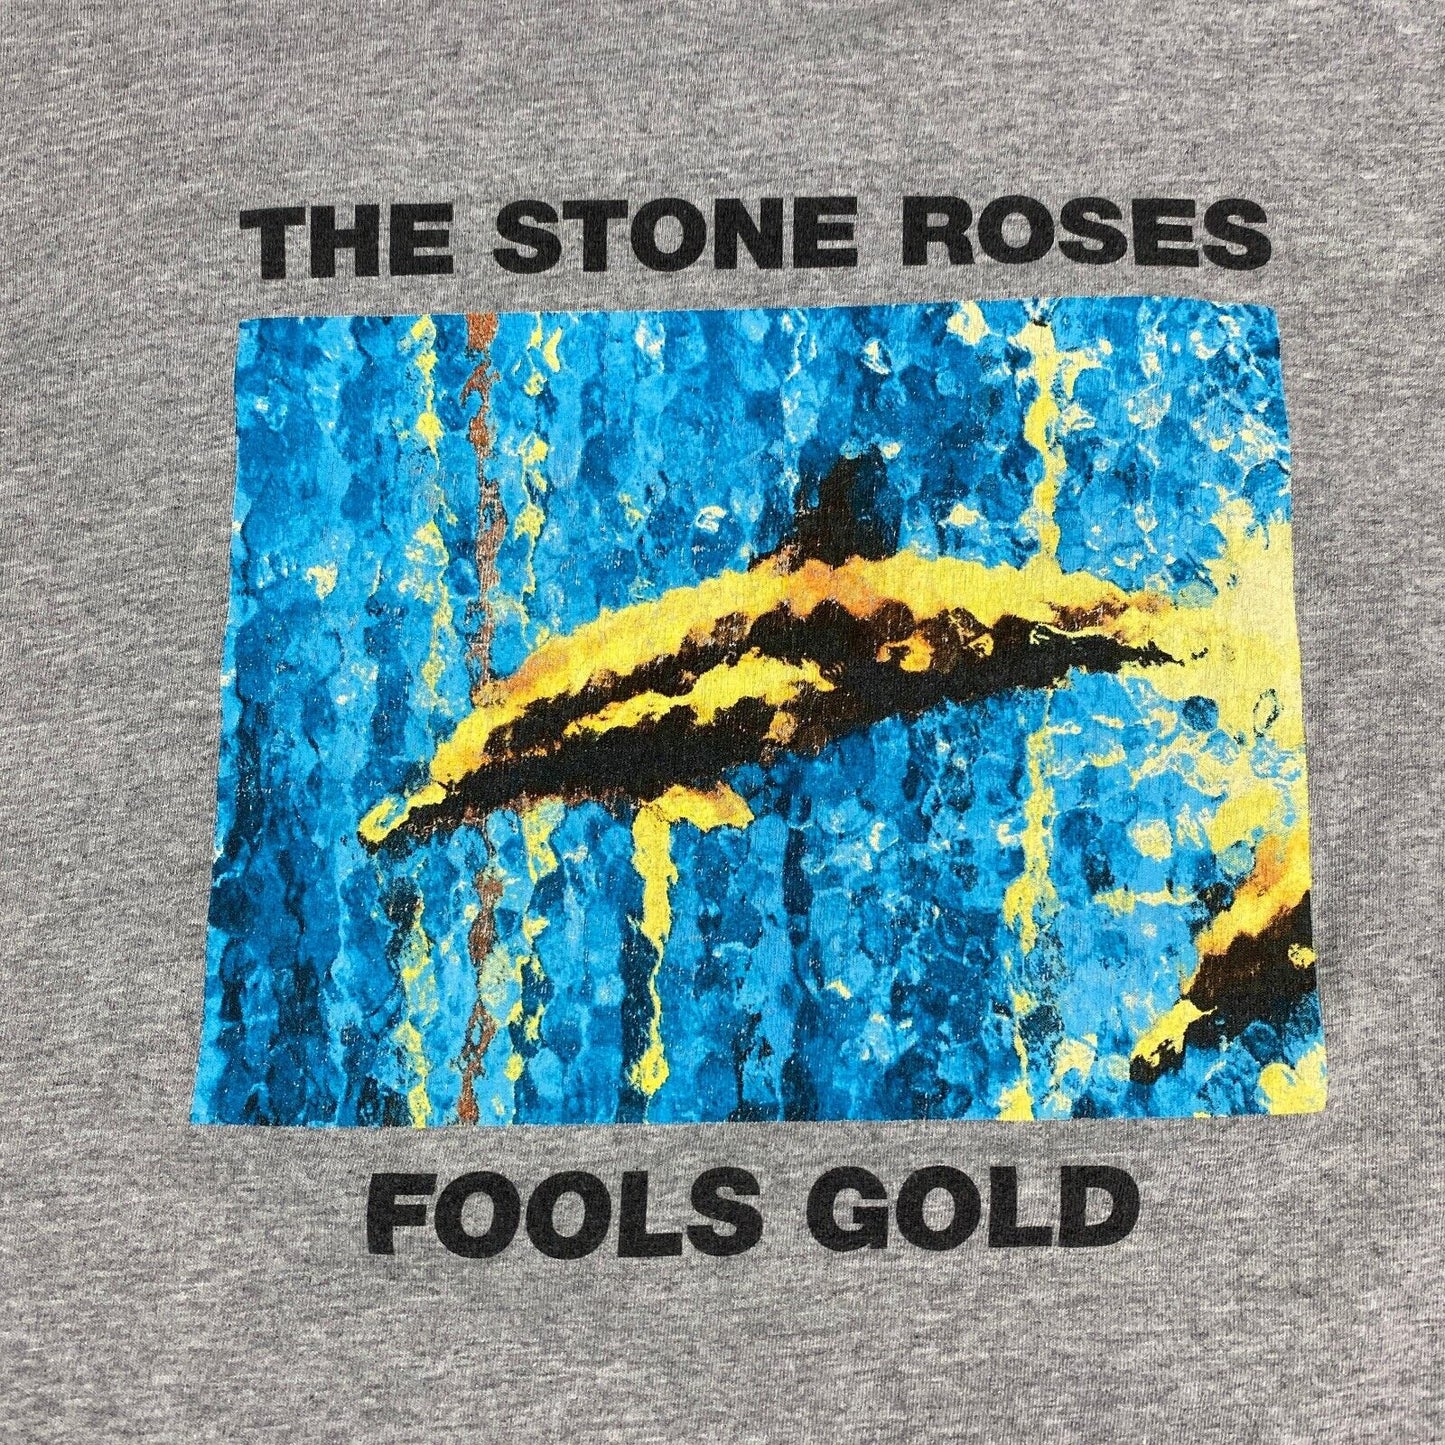 VINTAGE The Stones Roses Fools Gold Grey T-Shirt sz XL Adult